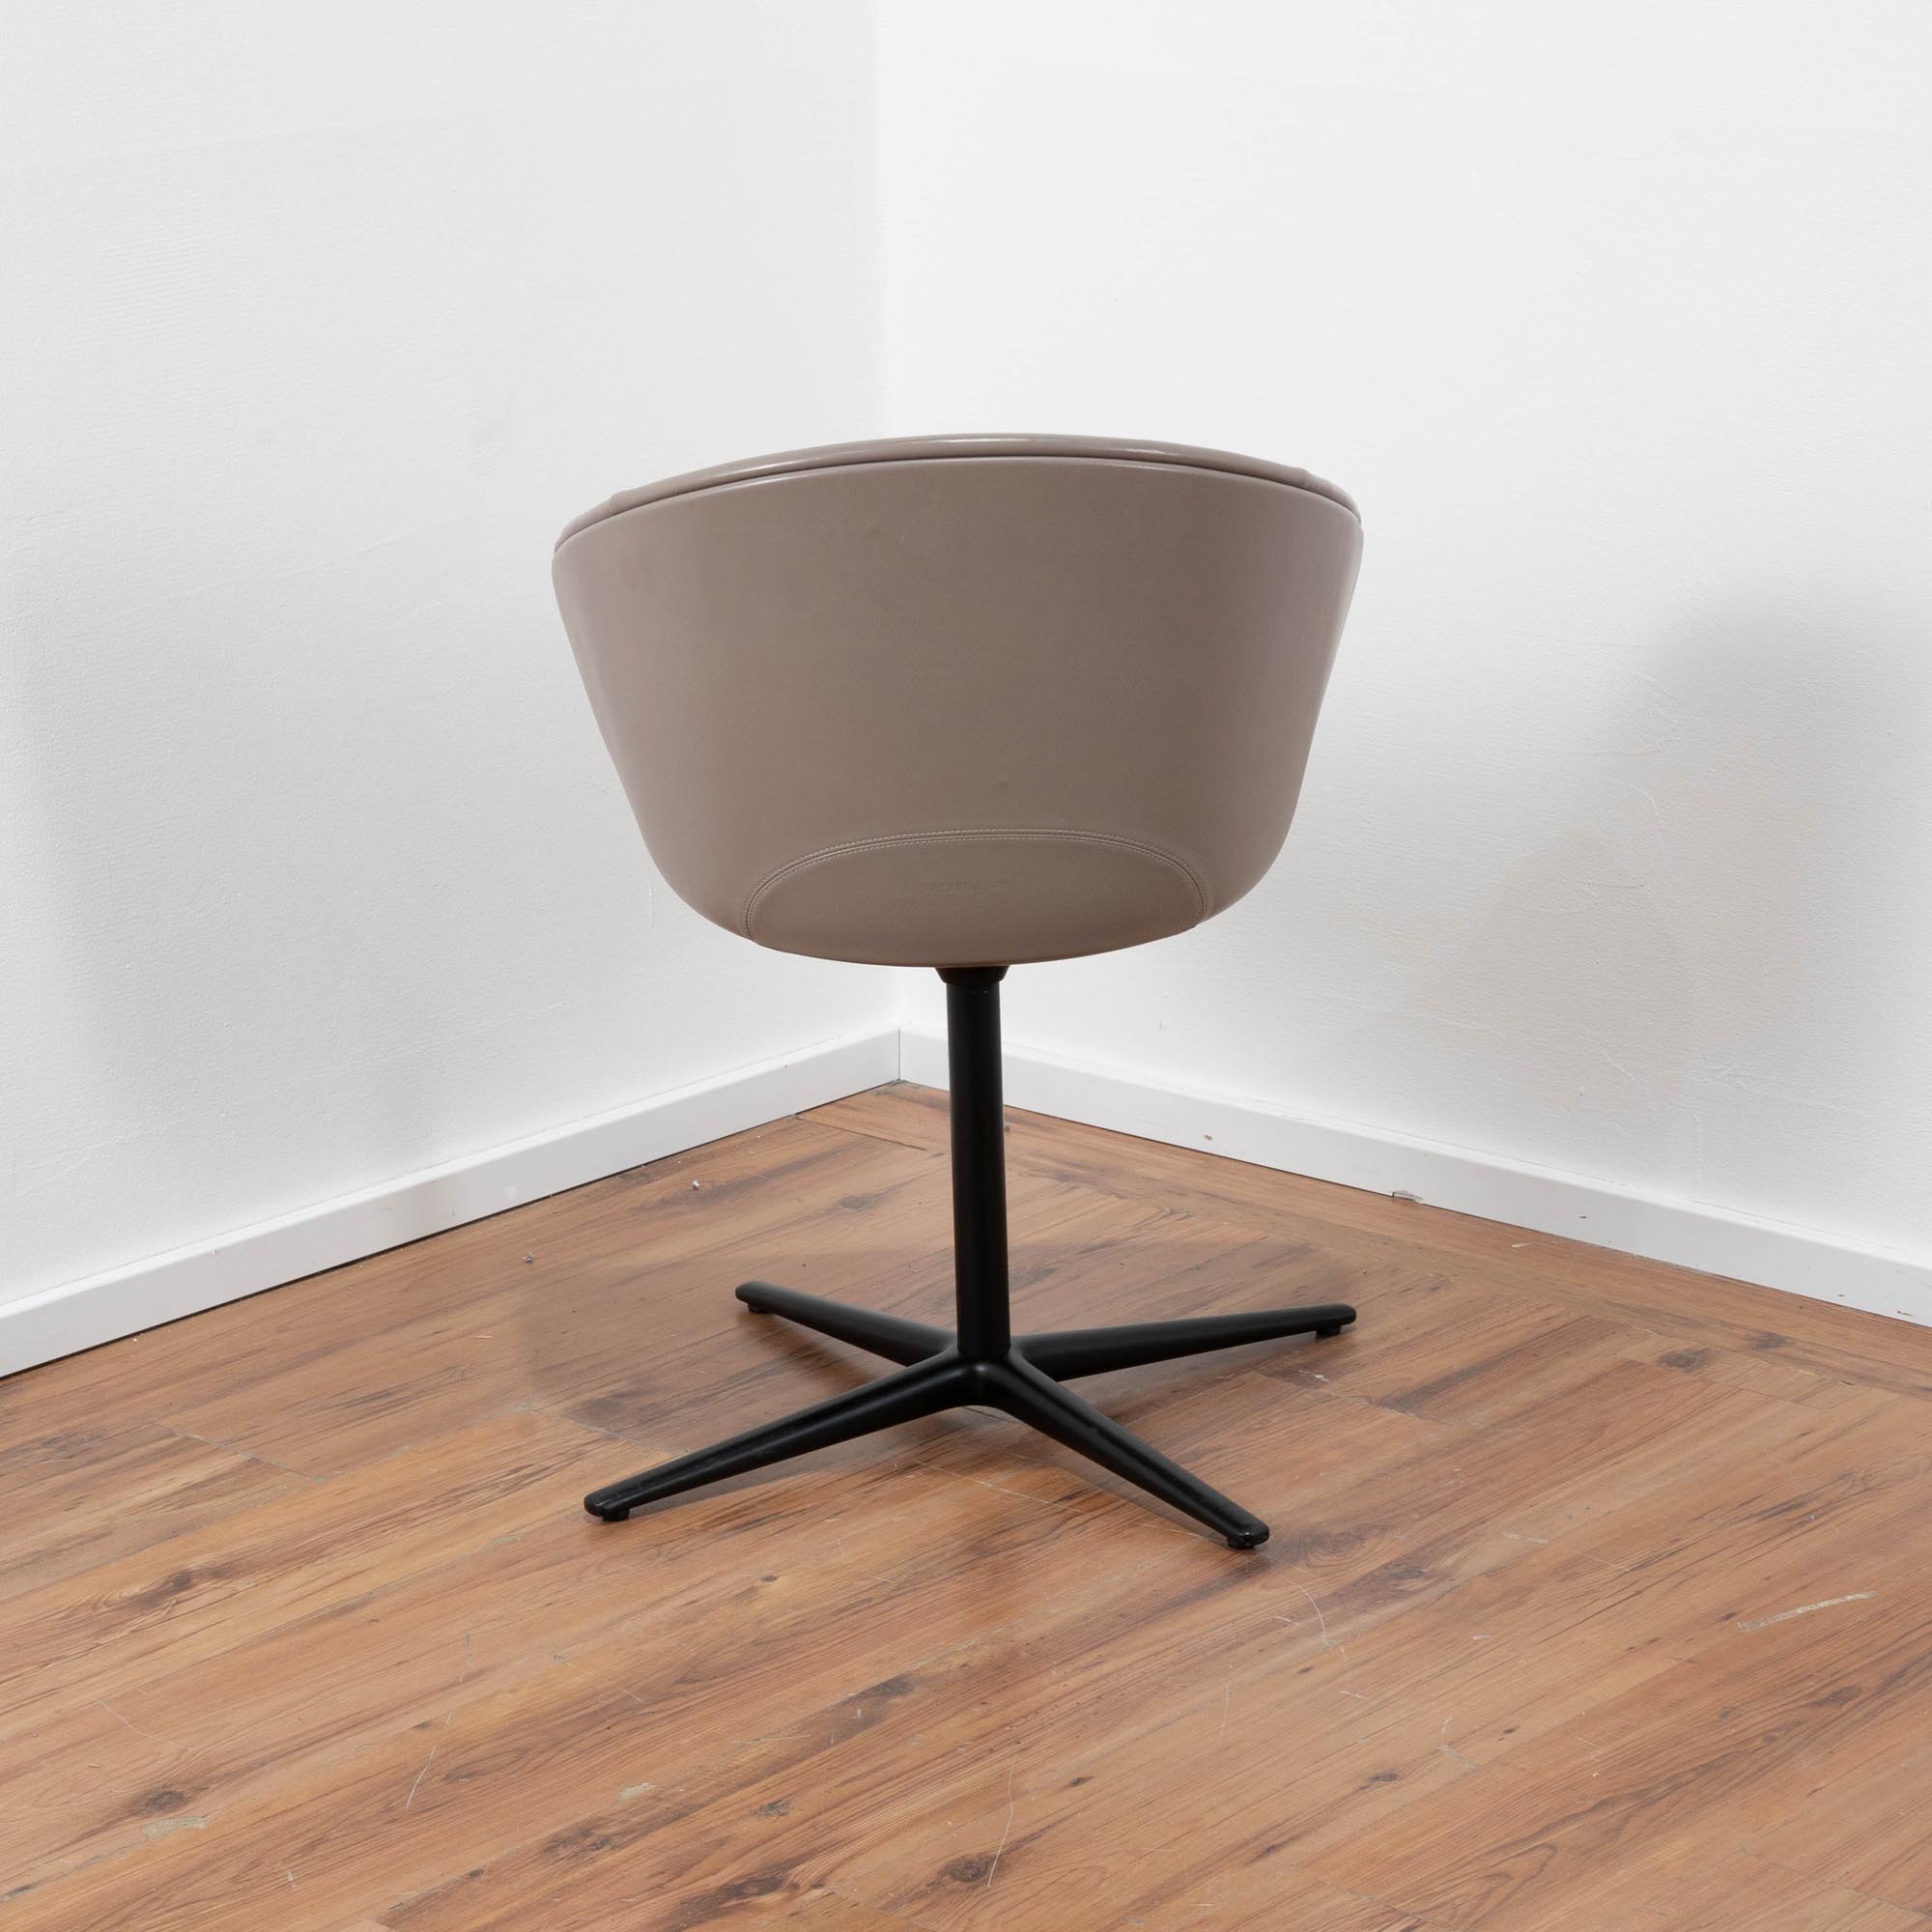 Walter Knoll "Kyo Chair" Besucherstuhl - Sitzschale Leder beige - 4-Fuß Gestell Metall schwarz